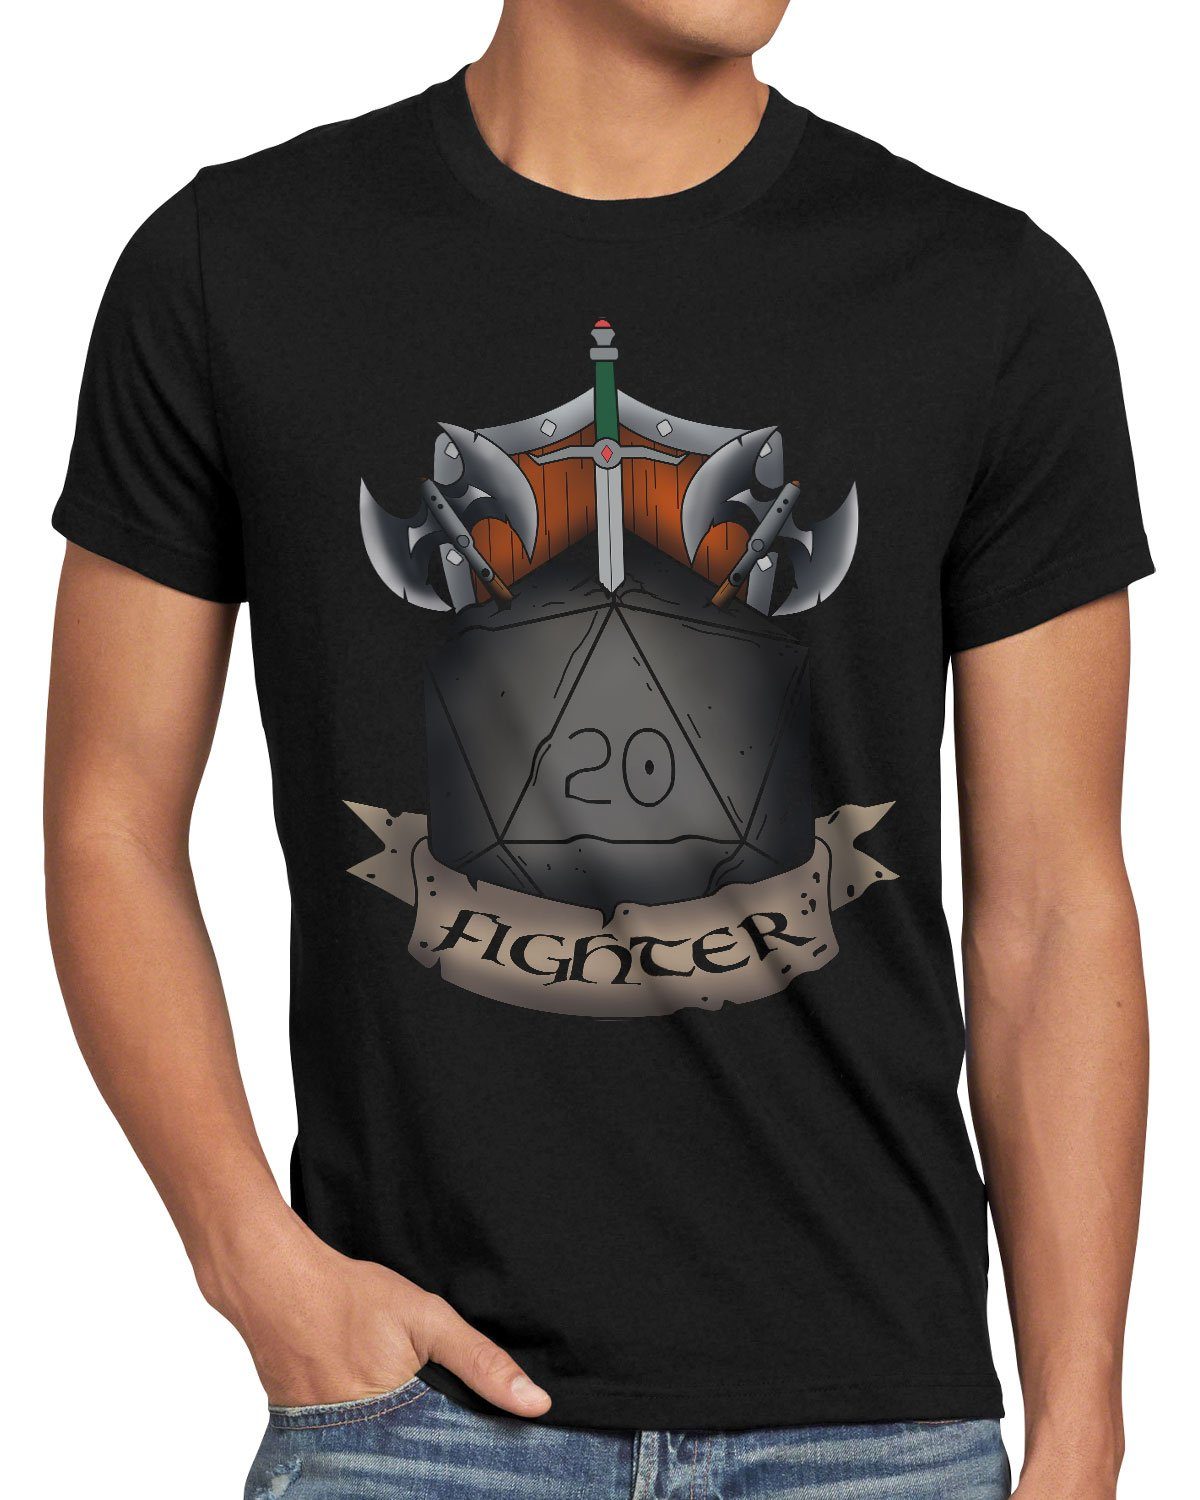 Würfel tabletop Print-Shirt d20 dragons Herren T-Shirt Fighter dungeon style3